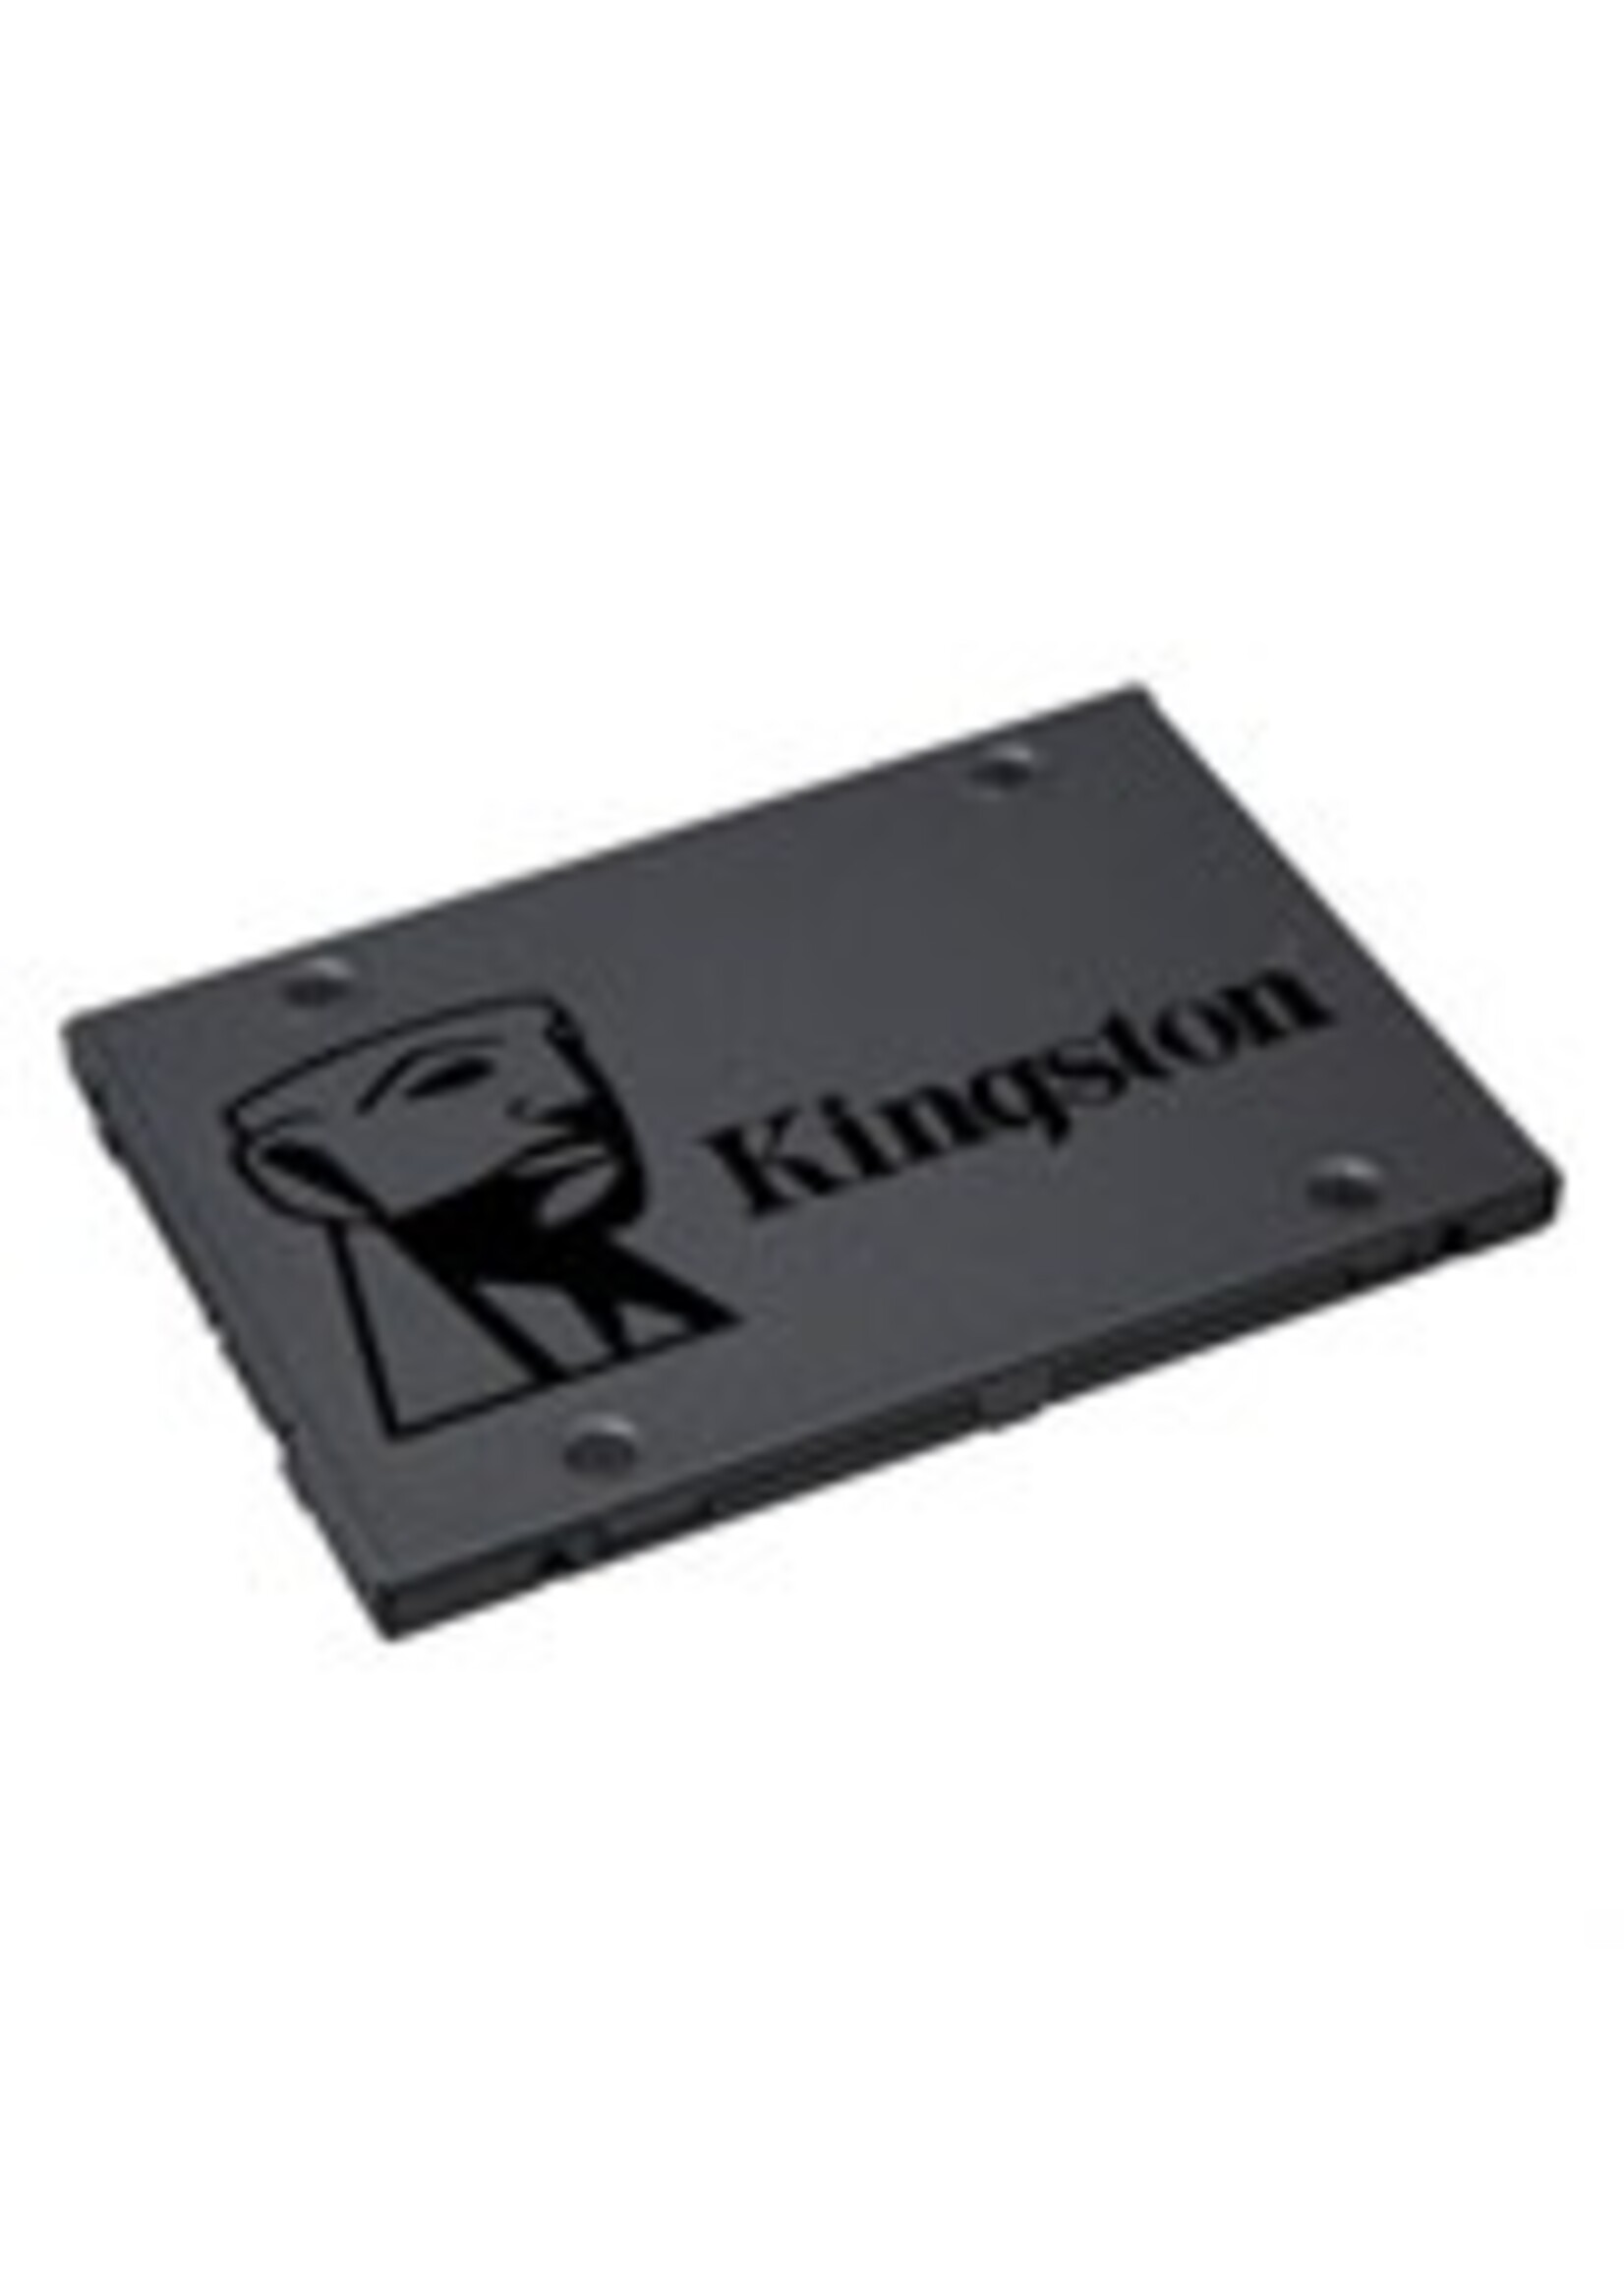 Kingston Kingston 480 GB SSD